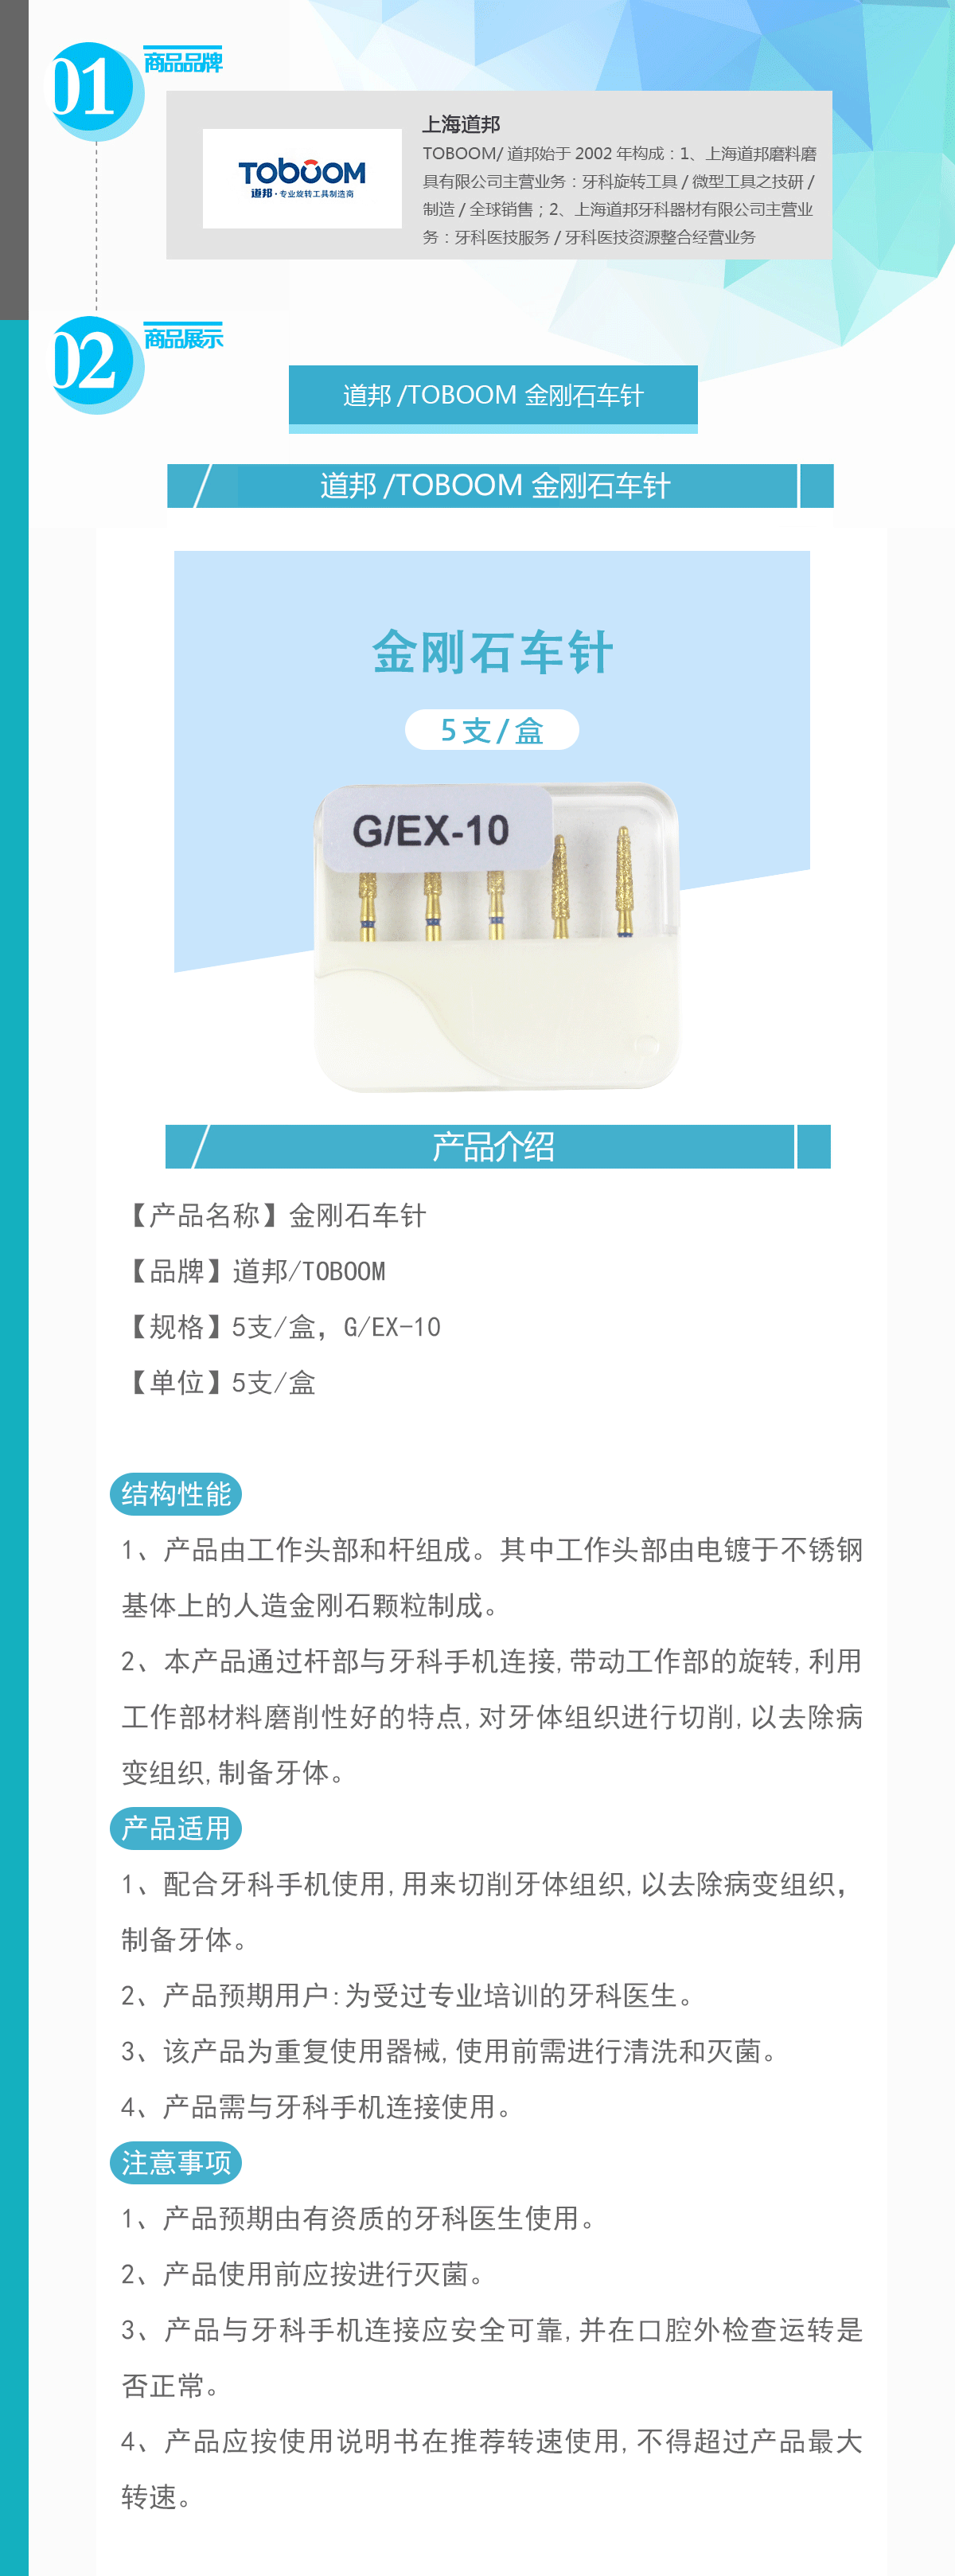 092-JGSGEX-10_01.gif